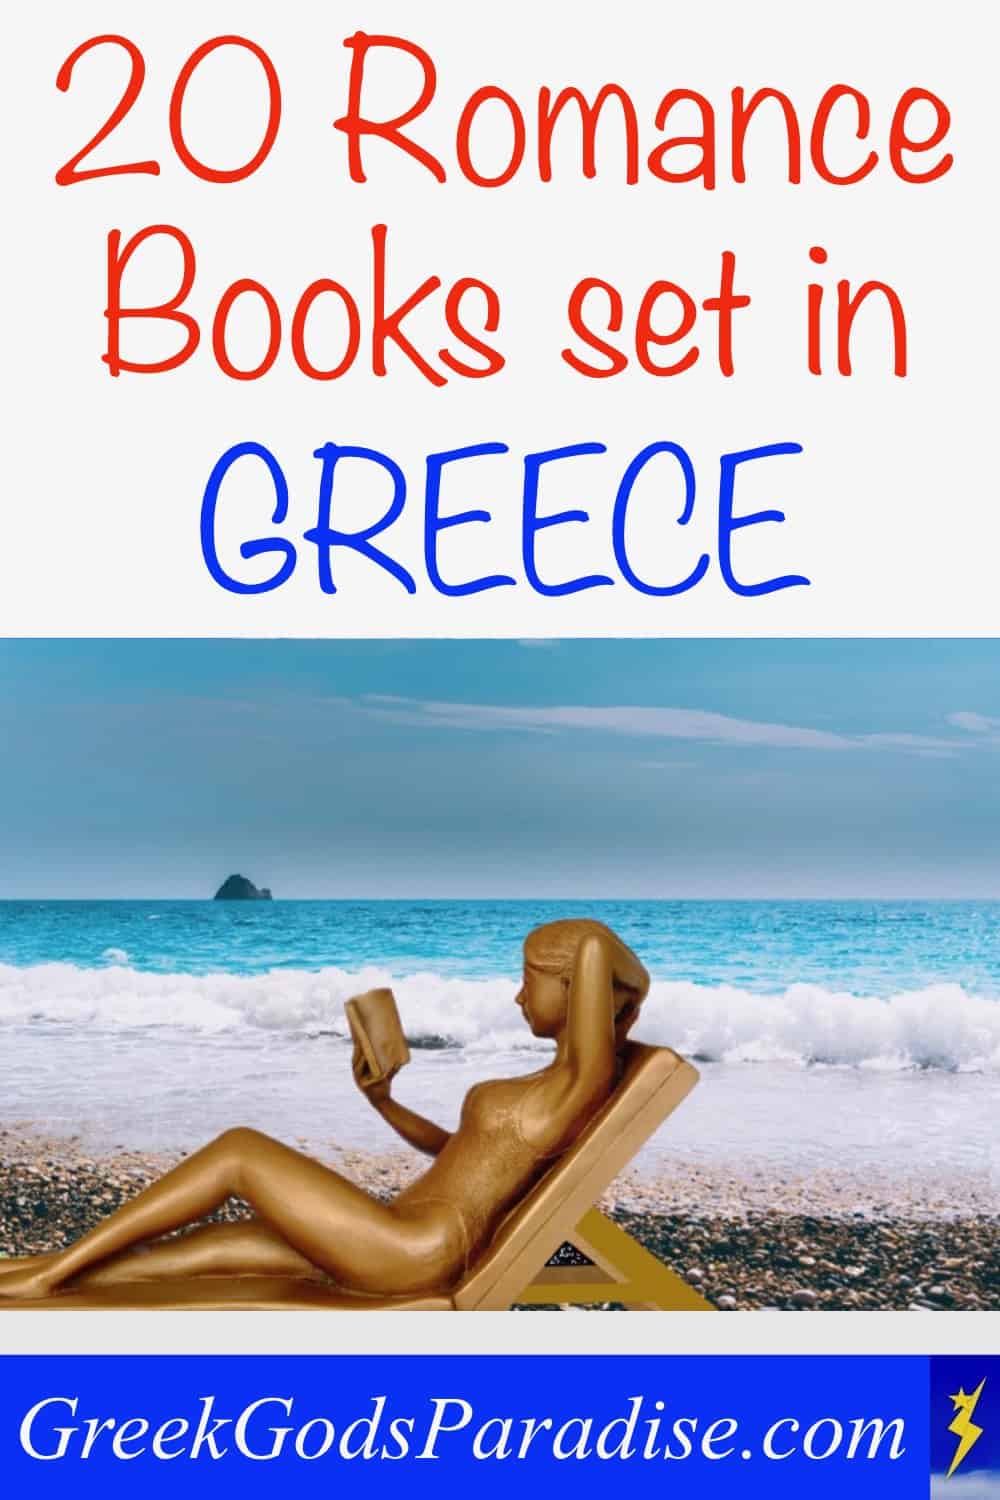 20 Romance Books set in Greece